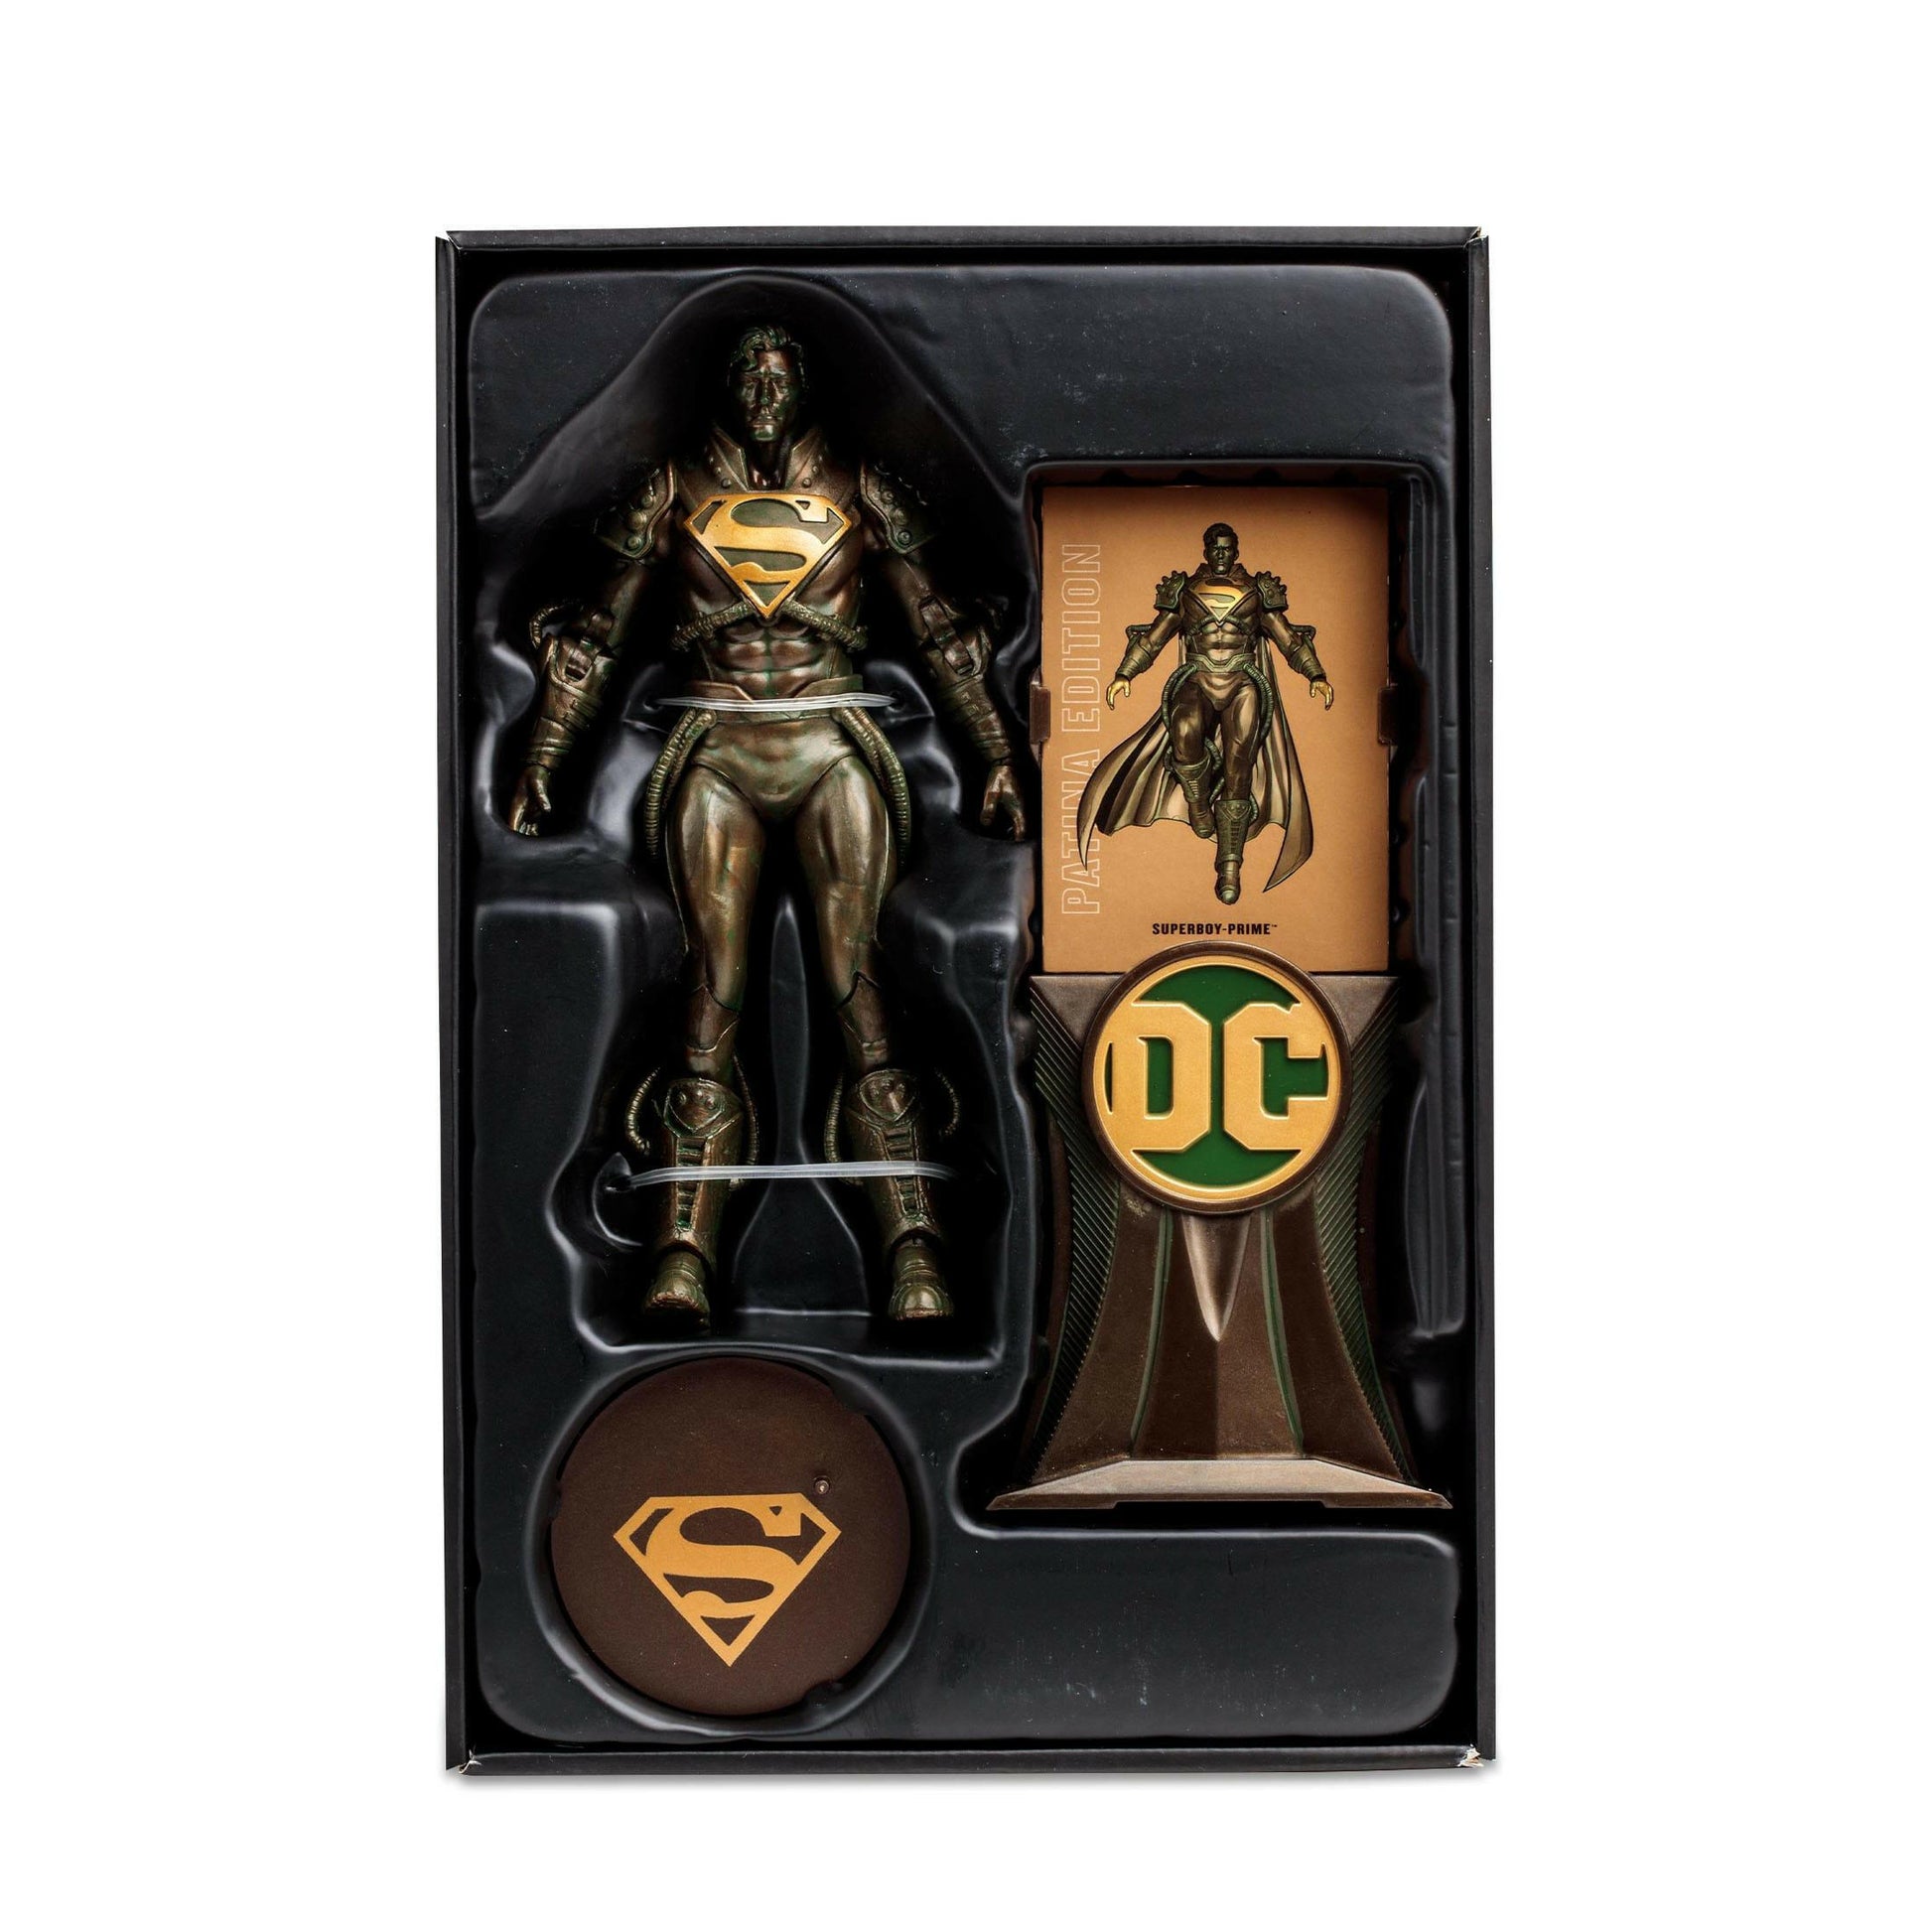 McFarlane DC Multiverse Actionfigur Superboy Prime (Patina) (Gold Label) 18cm - Premium Actionfigur from McFarlane - Just €36.99! Shop now at Toy-Storage